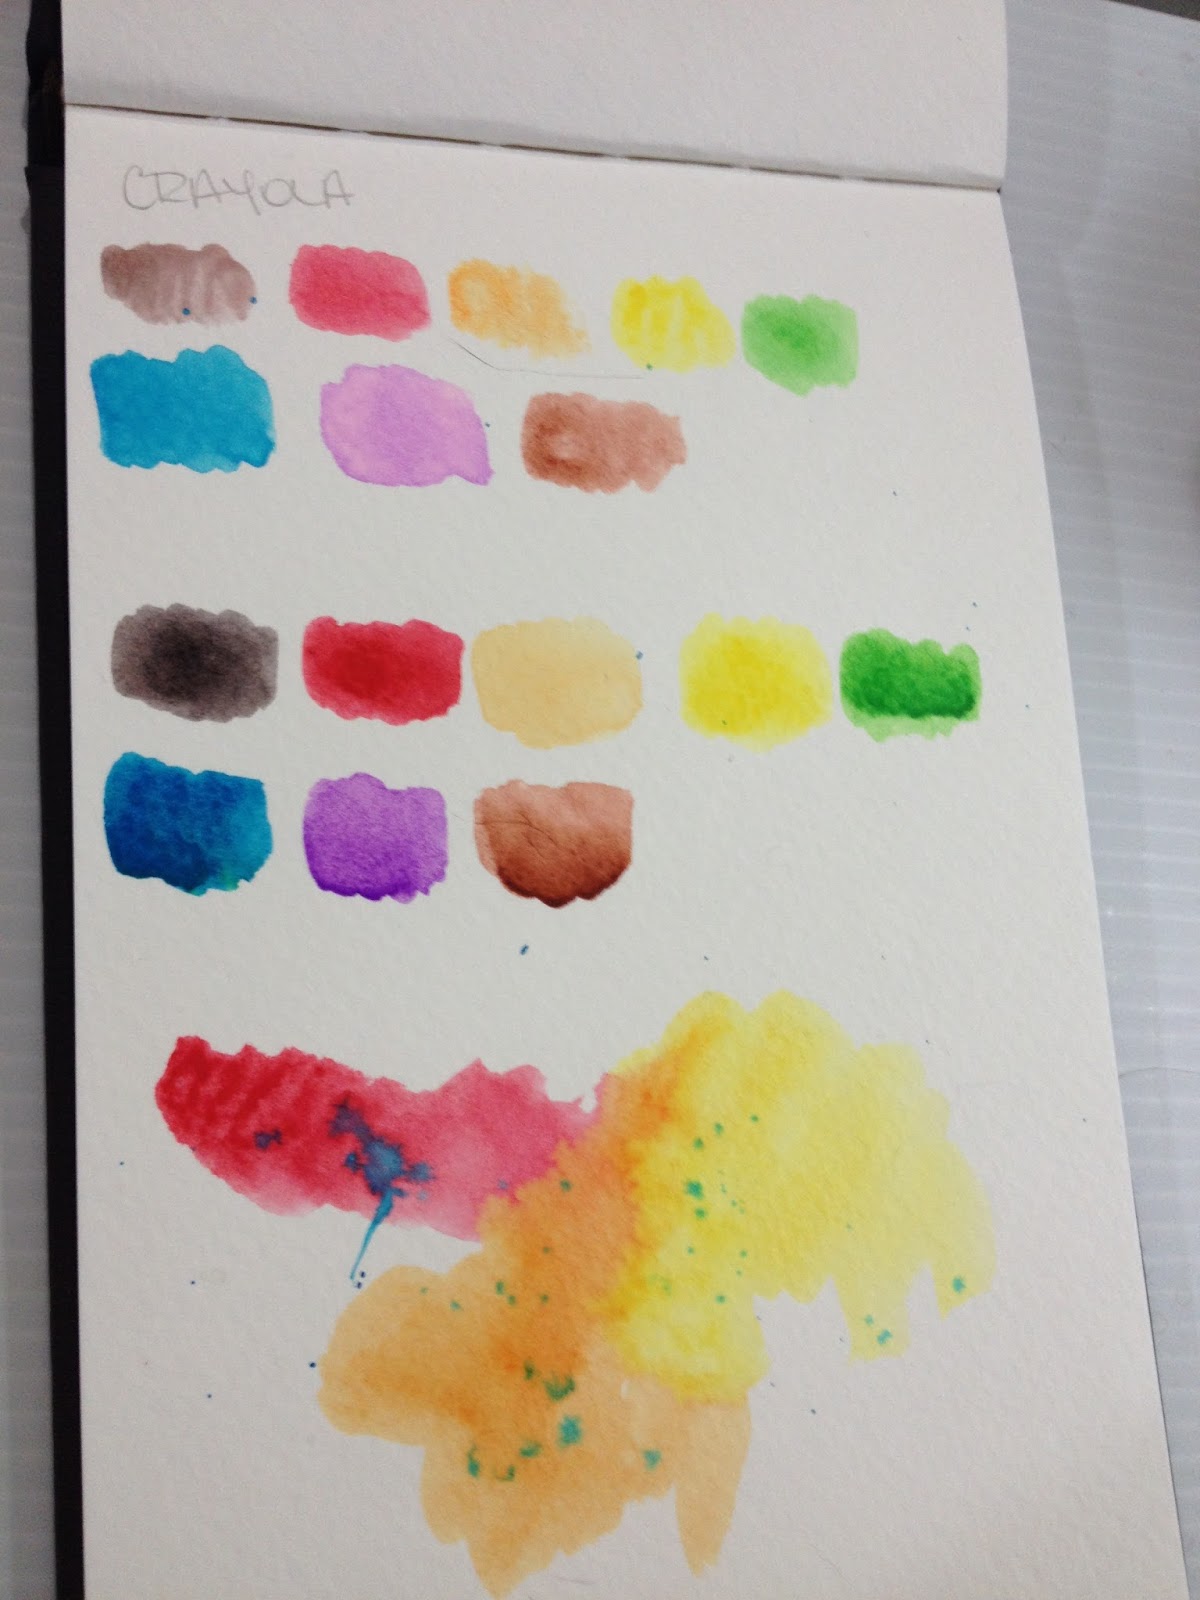 Crayola Artista II Non-Toxic Semi-Moist Watercolor Paint Set, Plastic Oval  Pan, 16 Assorted Colors